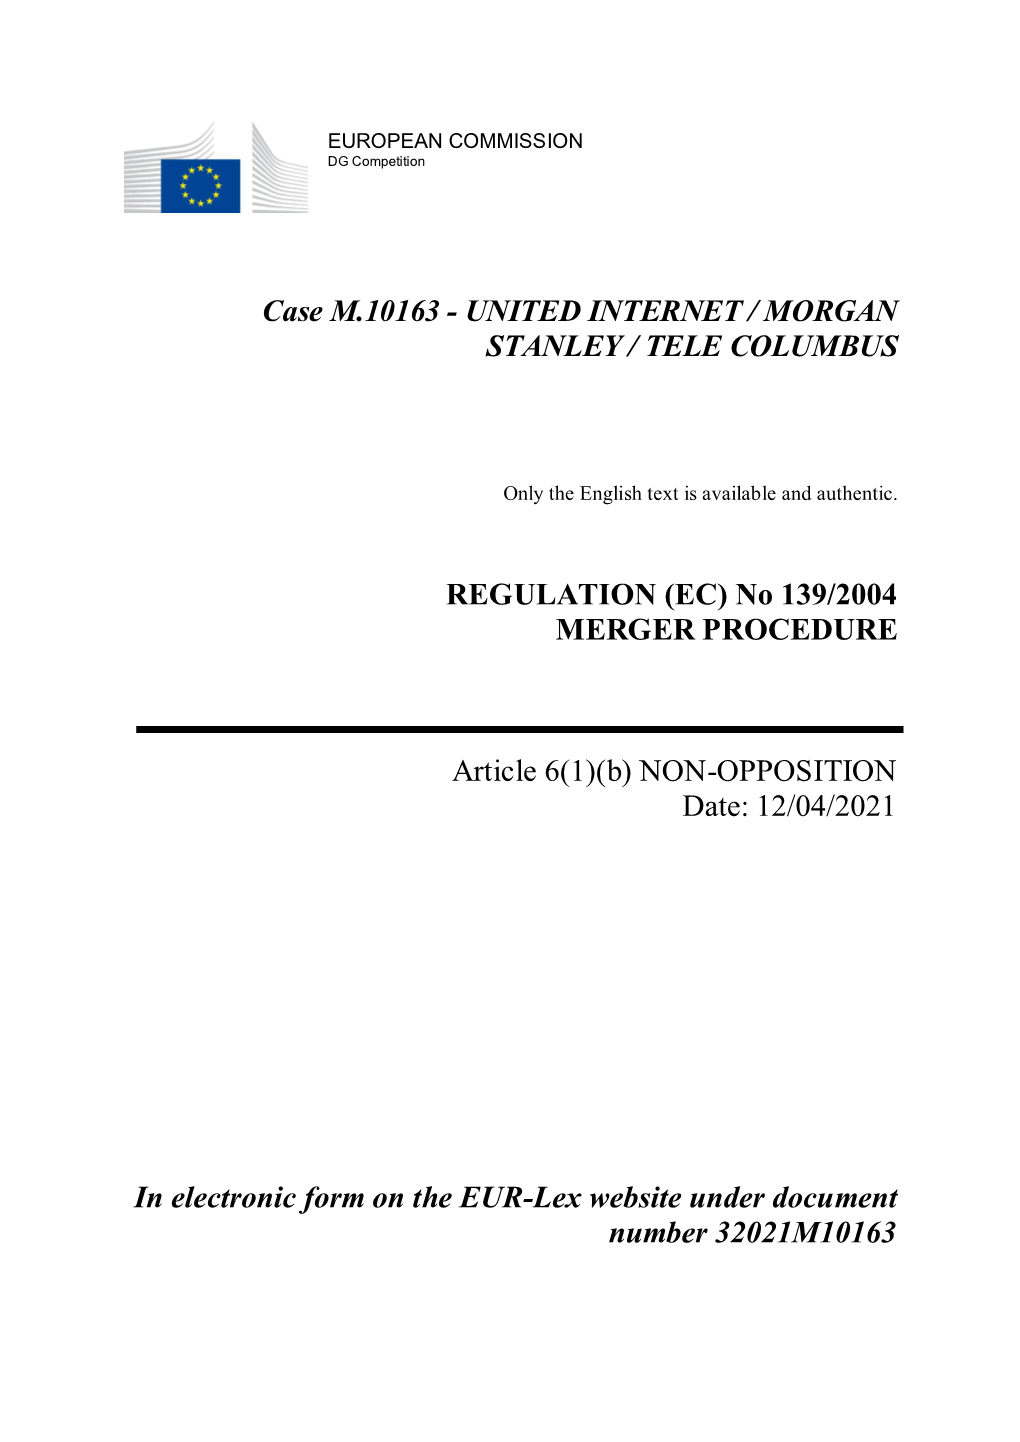 Case M.10163 - UNITED INTERNET / MORGAN STANLEY / TELE COLUMBUS